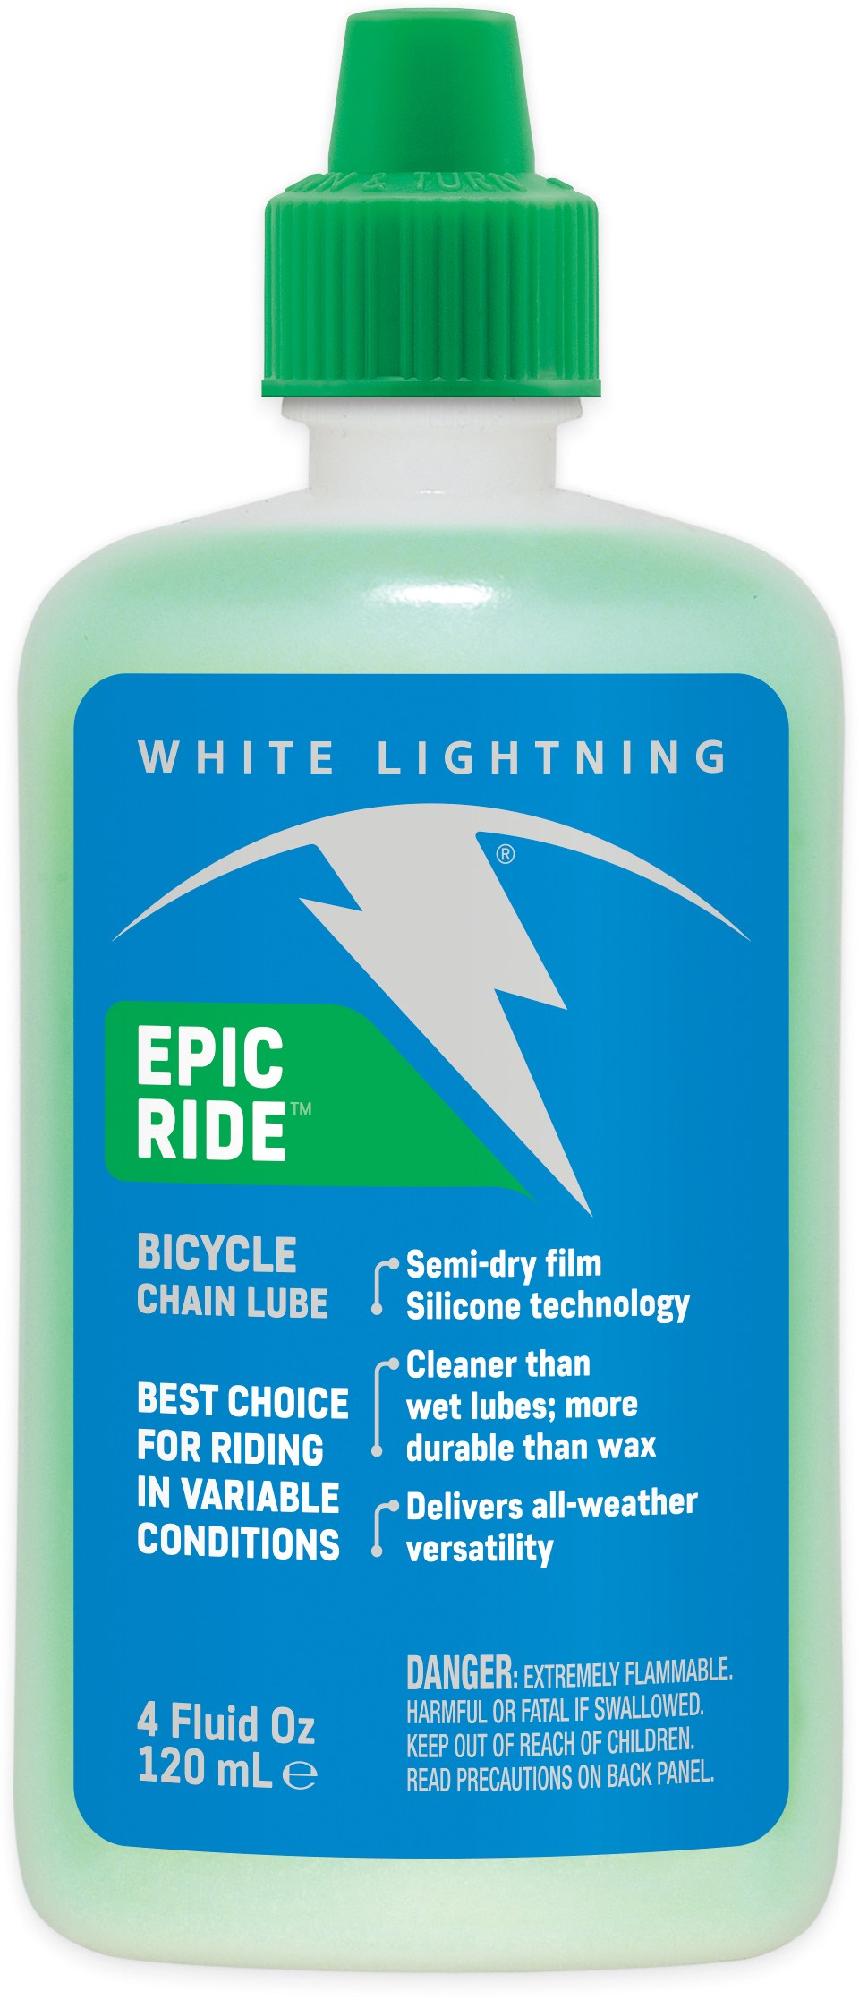 Смазка Epic Ride - 4 унций White Lightning смазка для цепи epic ride white lightning цвет drip